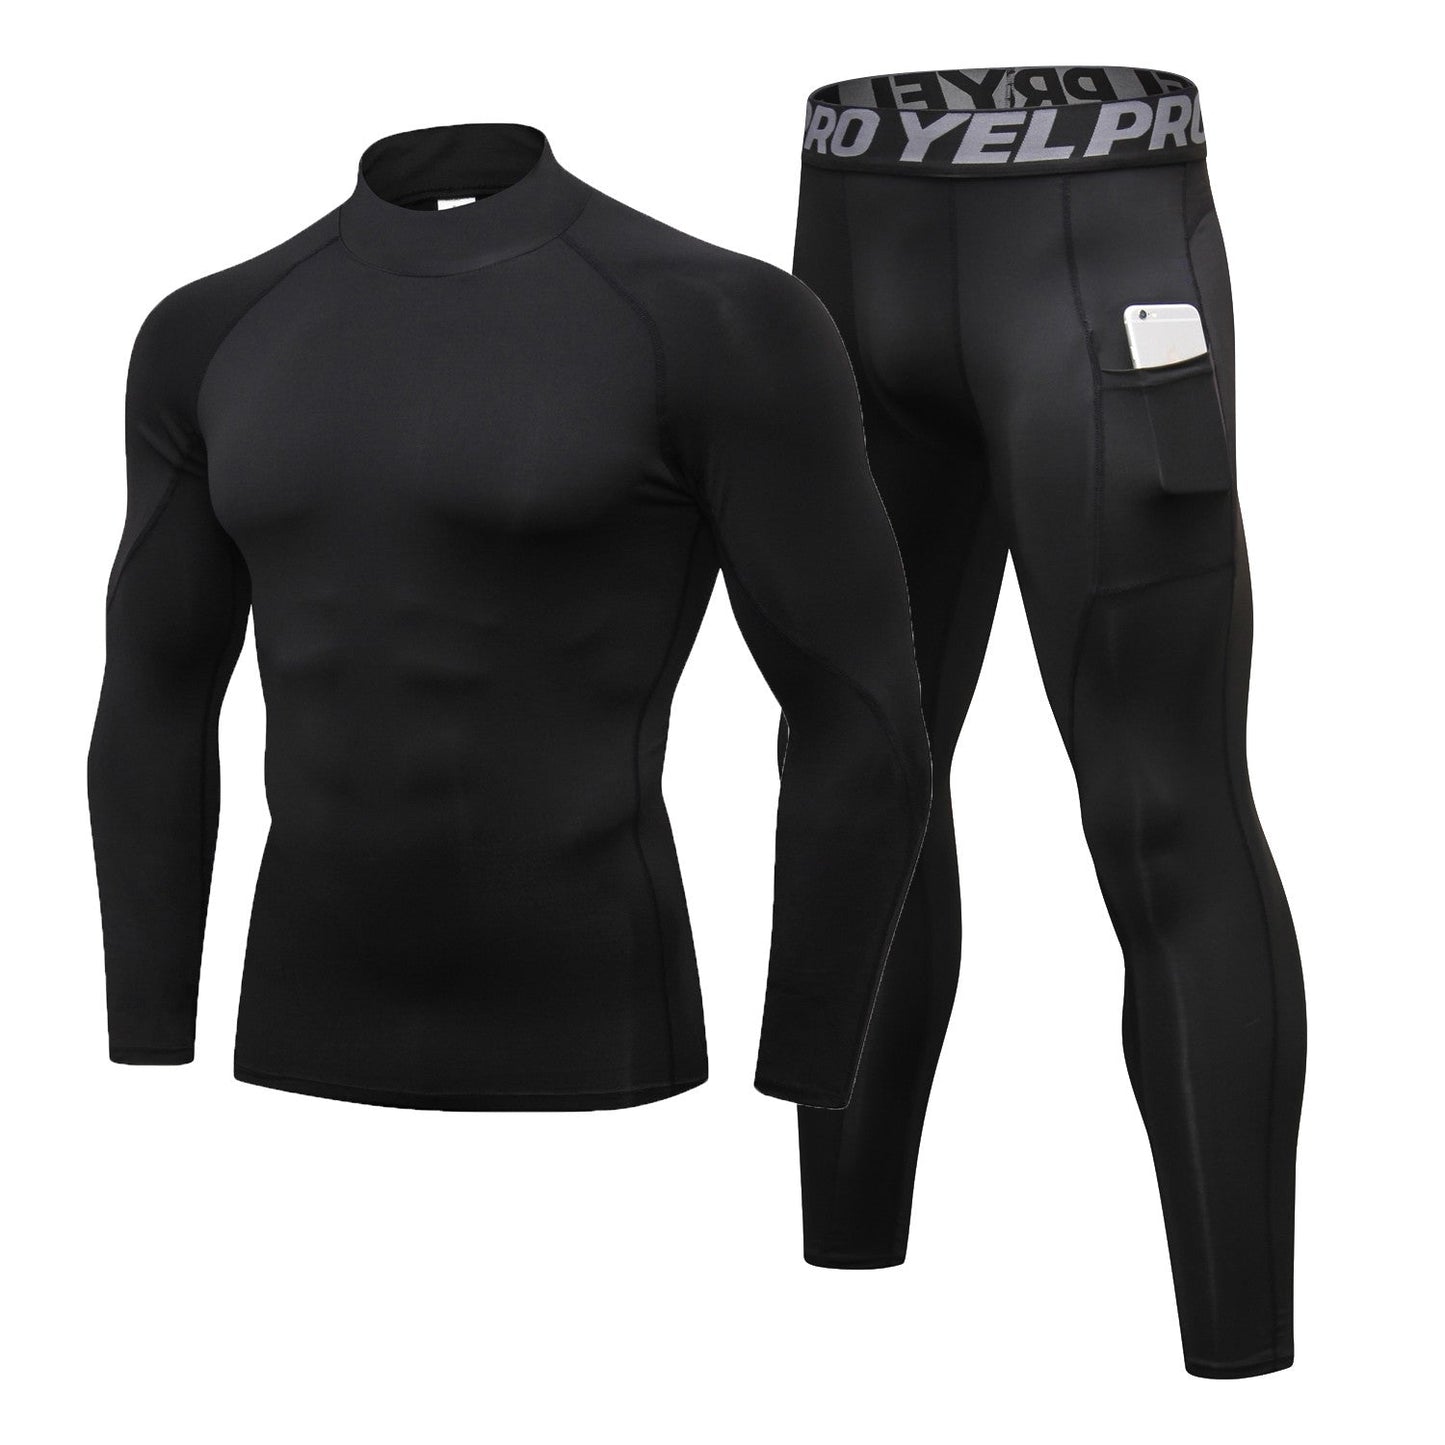 LANBAOSI Mens Athletic Apparel Running Set Male Compression Shirt Legging Fitness Tracksuit Gym Suits LANBAOSI